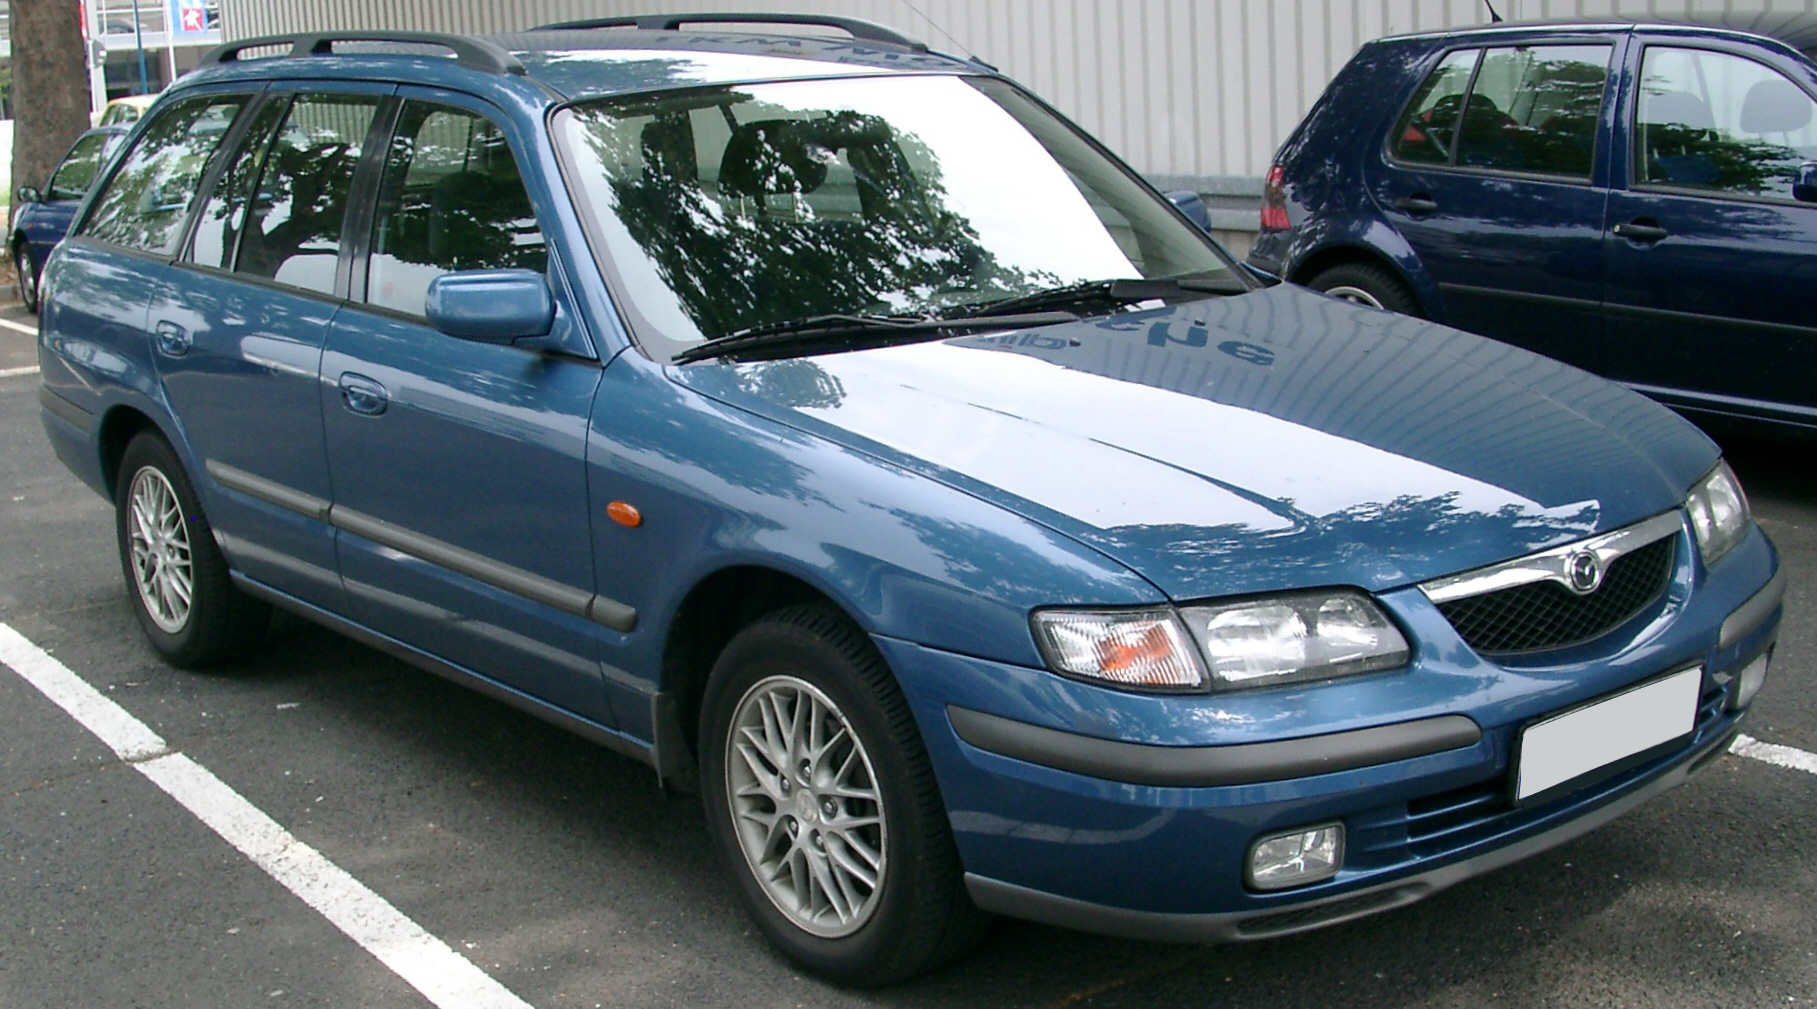 File:Mazda 626 front 20070609.jpg - Wikimedia Commons